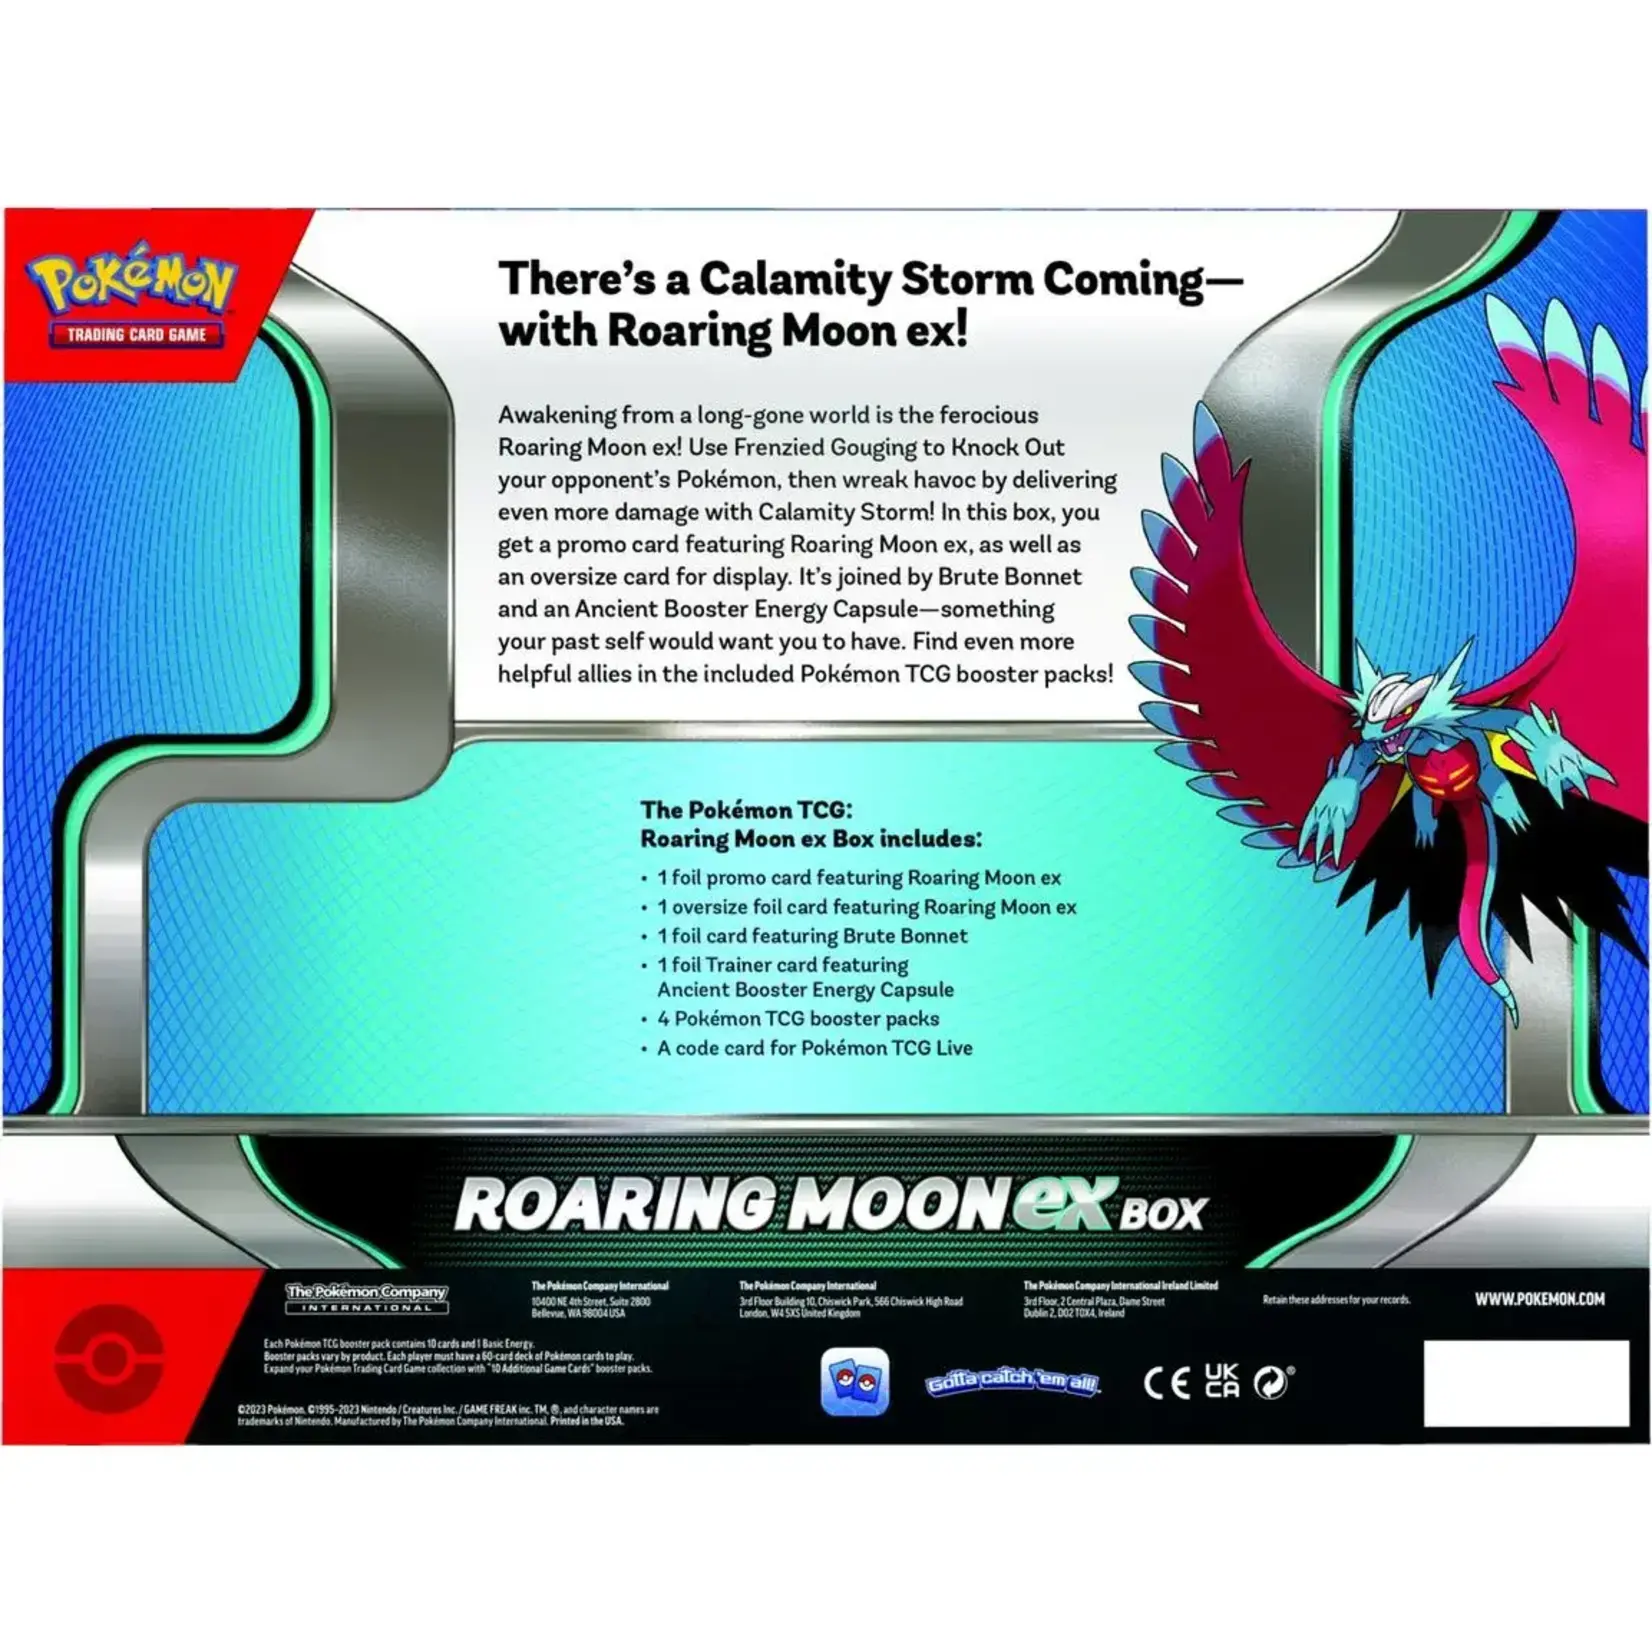 Pokémon Pokemon TCG: Roaring Moon ex Deluxe Battle Box